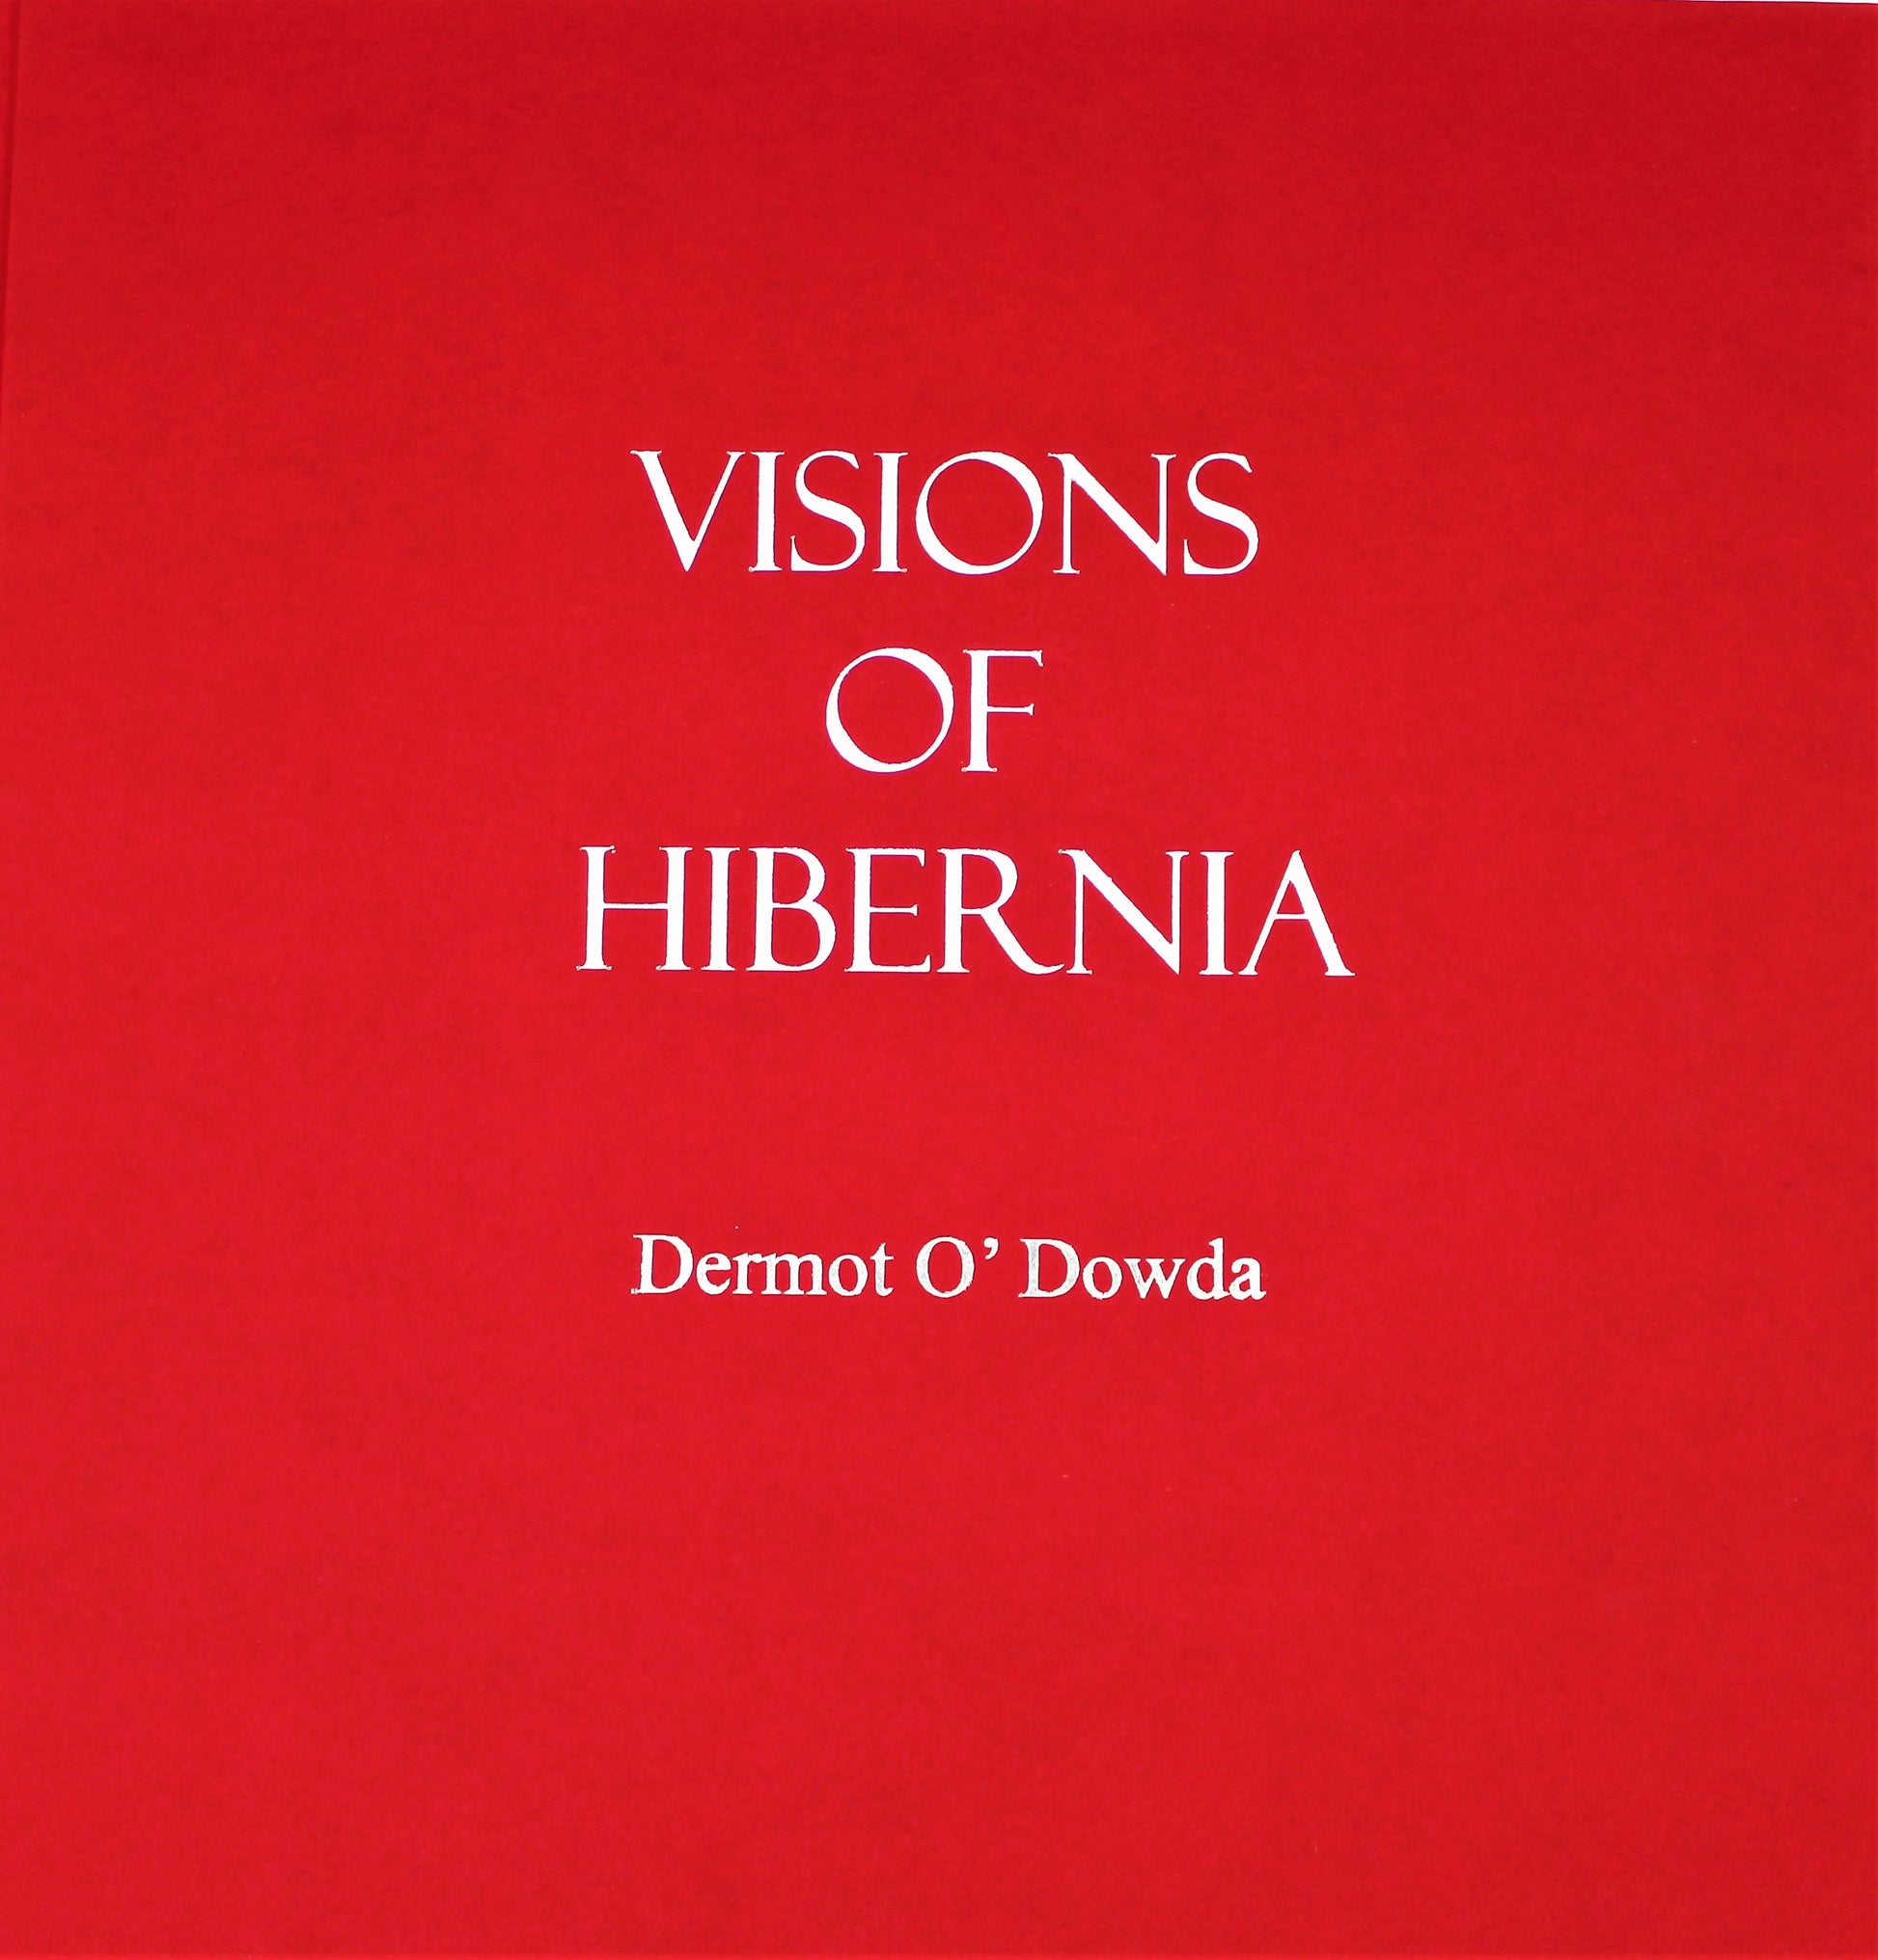 Visions of Hibernia Hardback Book by Dermot O' Dowda